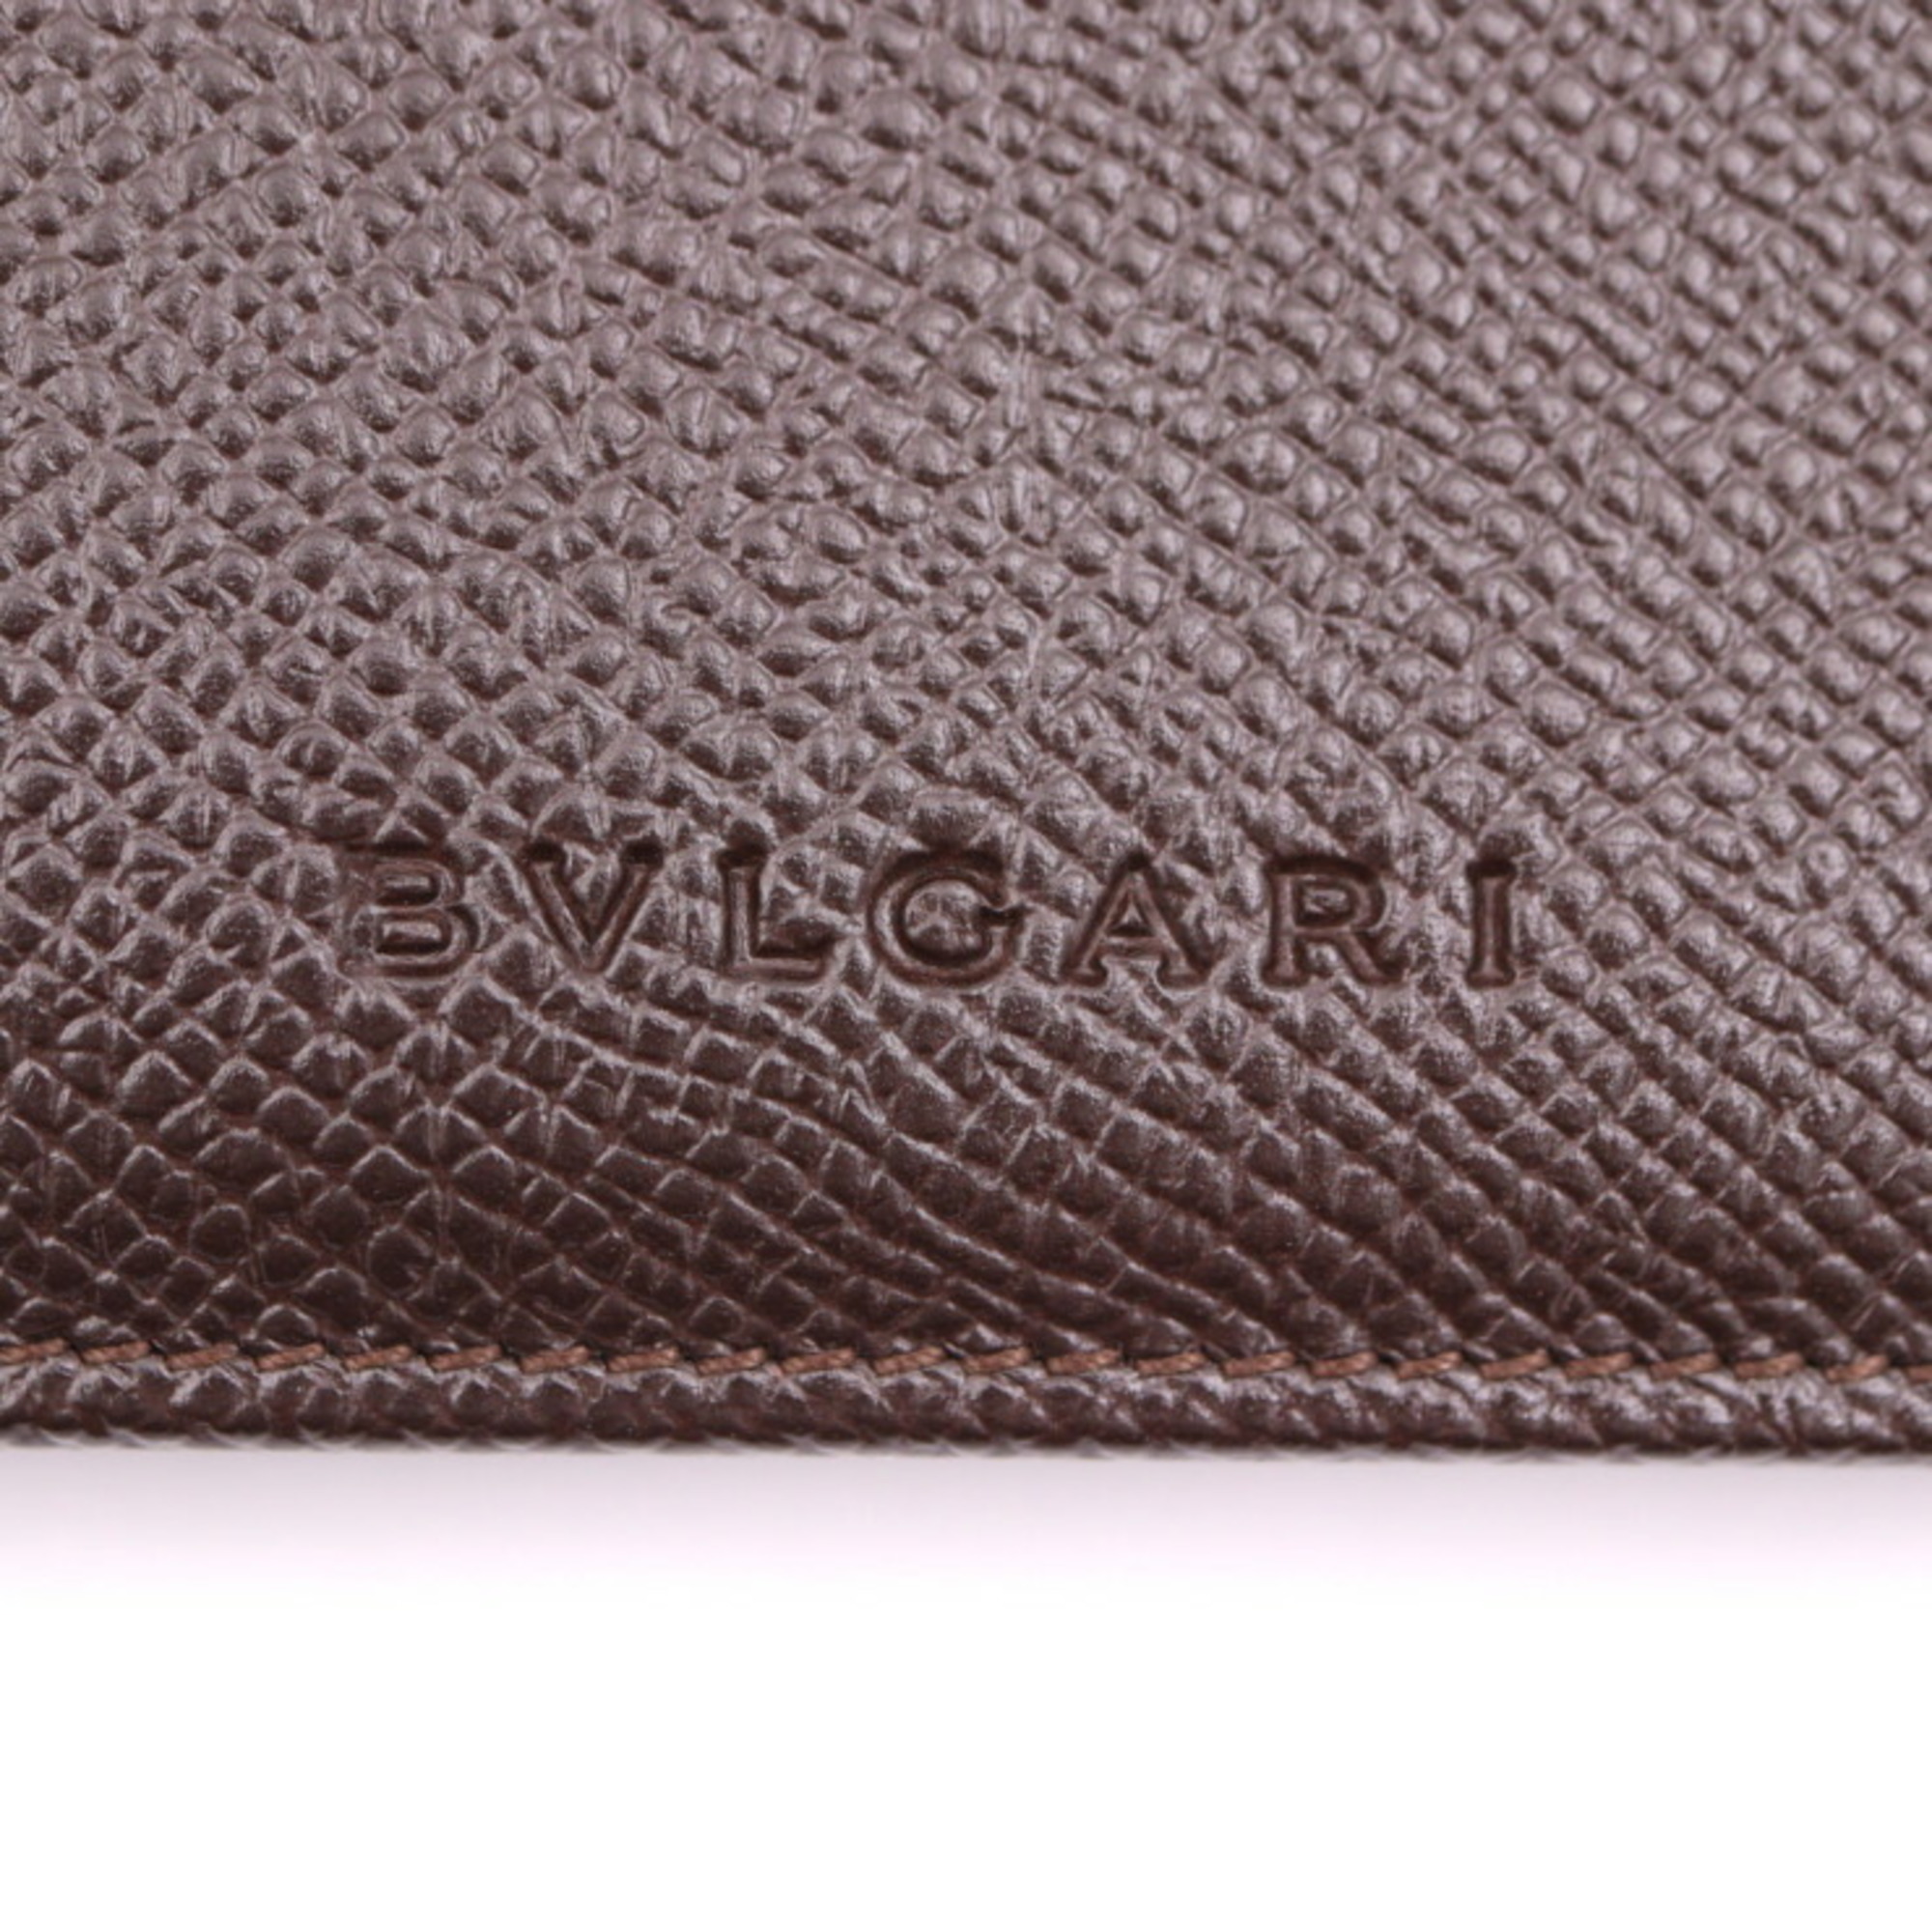 BVLGARI Billfold Bi-fold Wallet 20825 Grained Calf Leather Chocolate Card Case